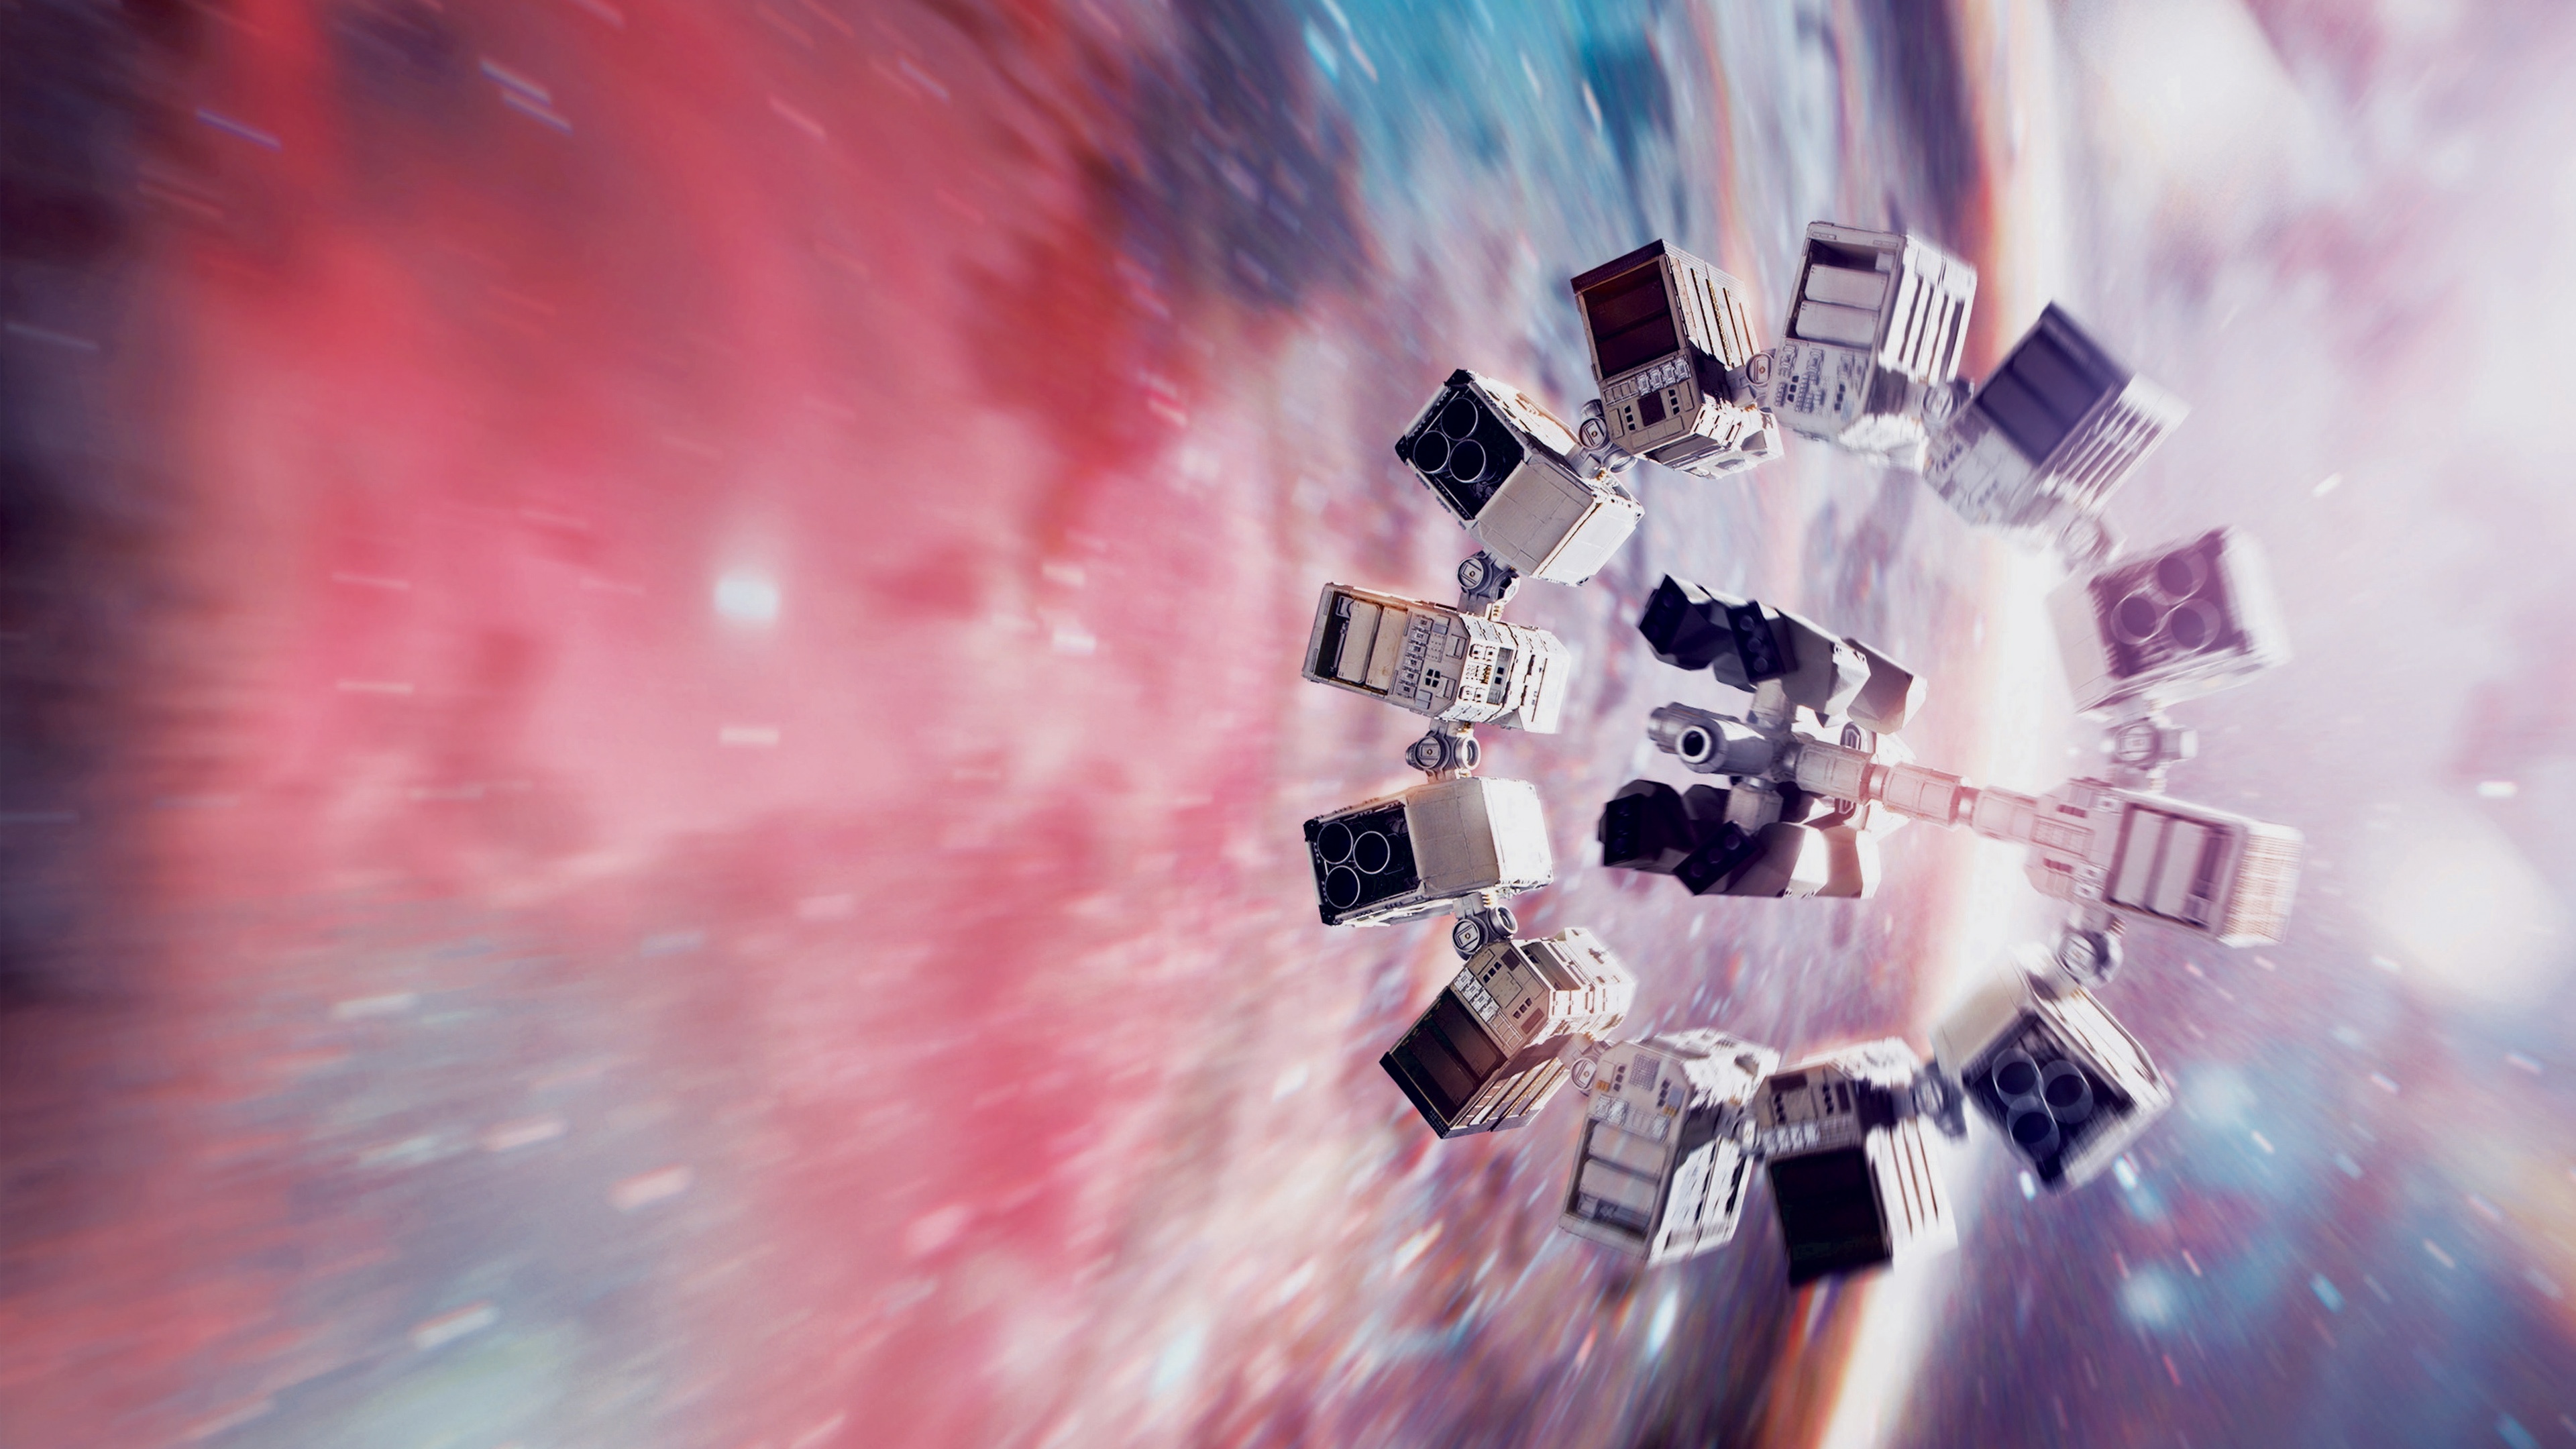 Interstellar Endurance Spaceship Wallpaper HD